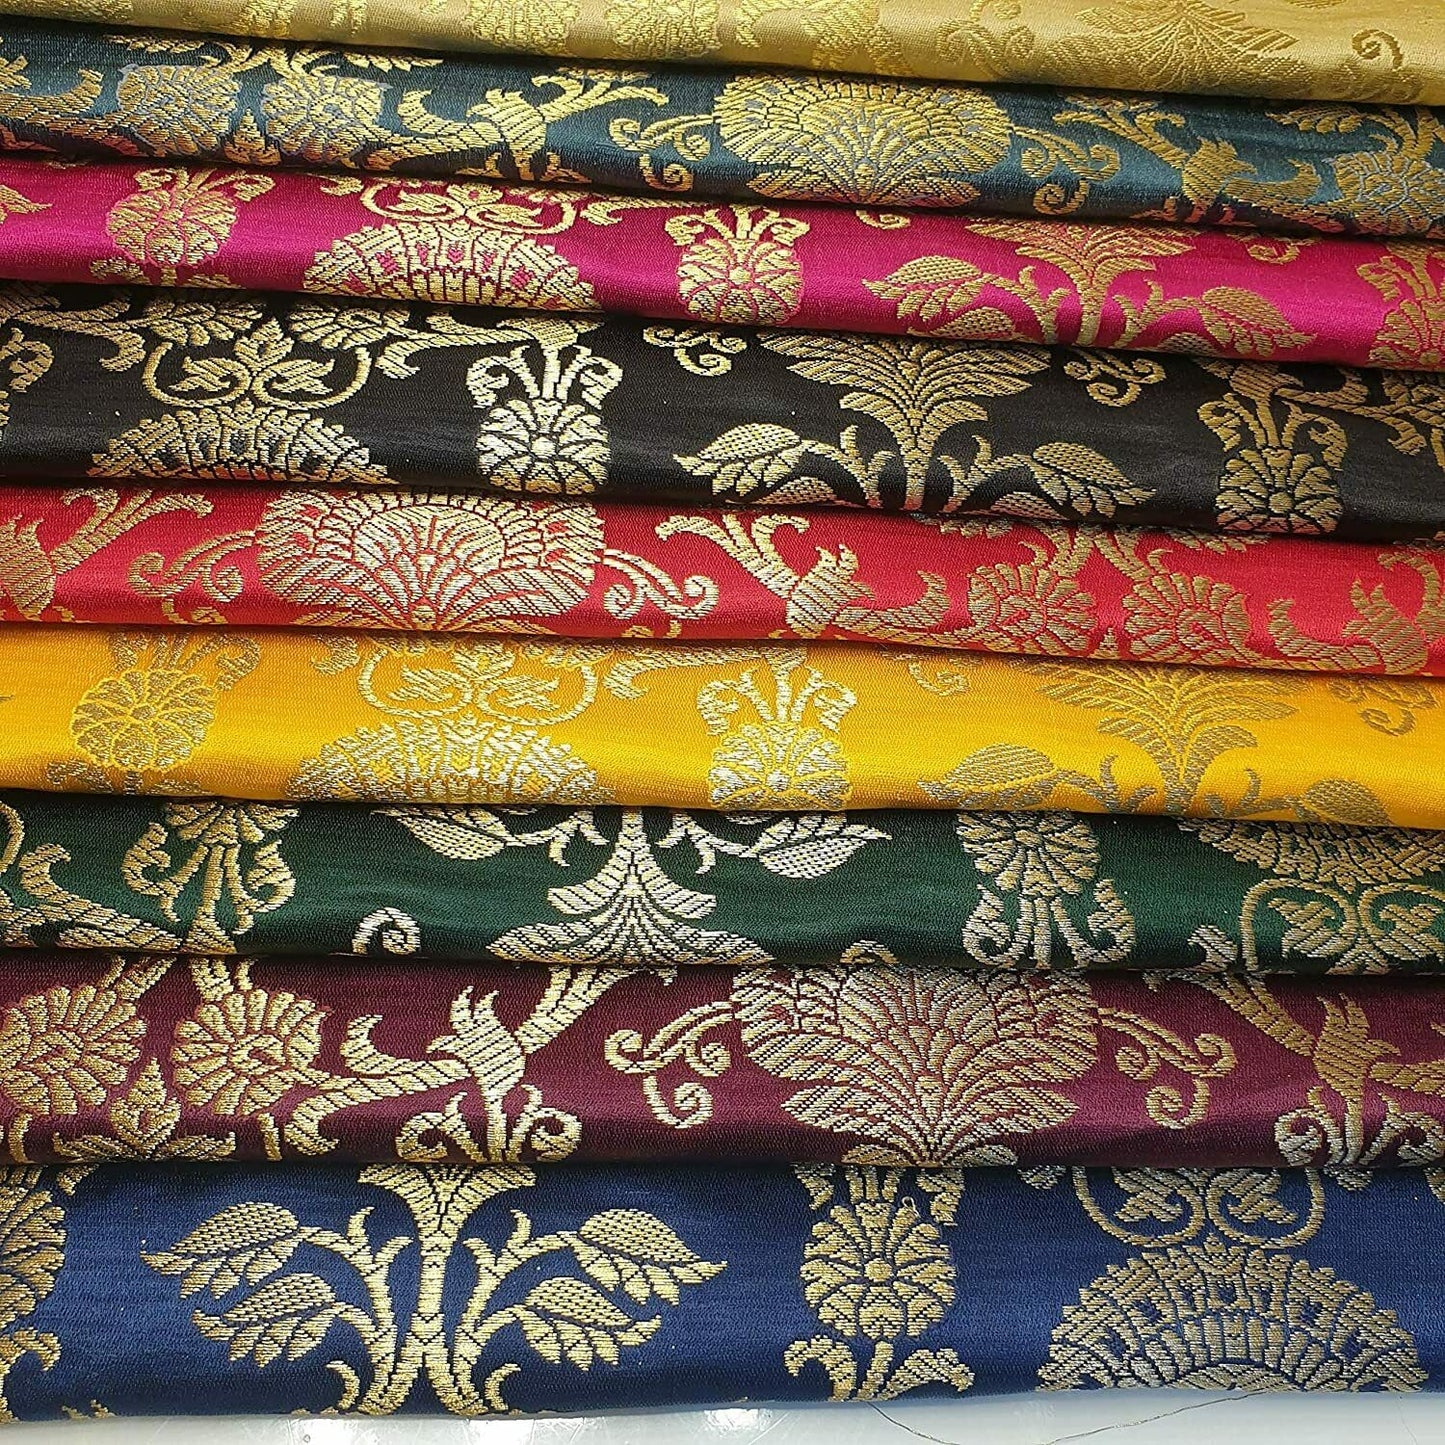 New Prints Ornamental Floral Gold Metallic Print Indian Banarasi Brocade Fabric (Navy Blue)